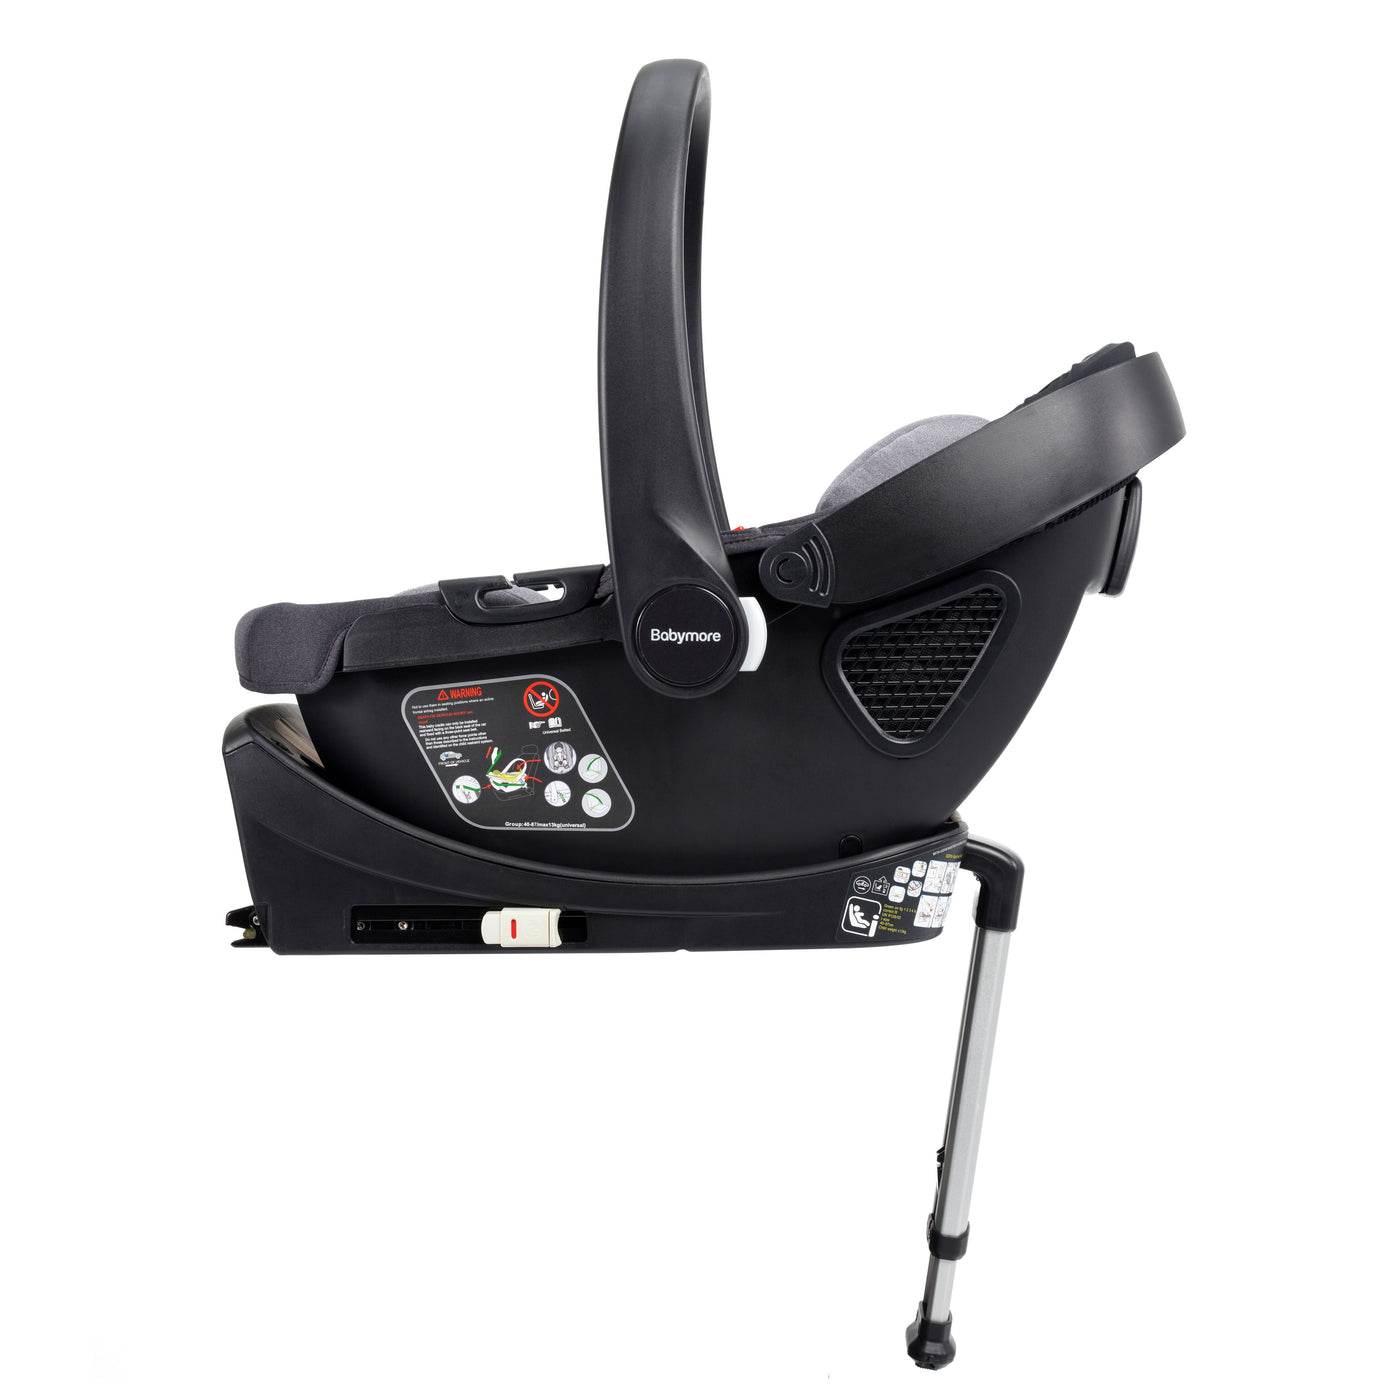 Coco i-Size Baby Car Seat with Isofix Base-Car Seats-Babymore-Yes Bebe